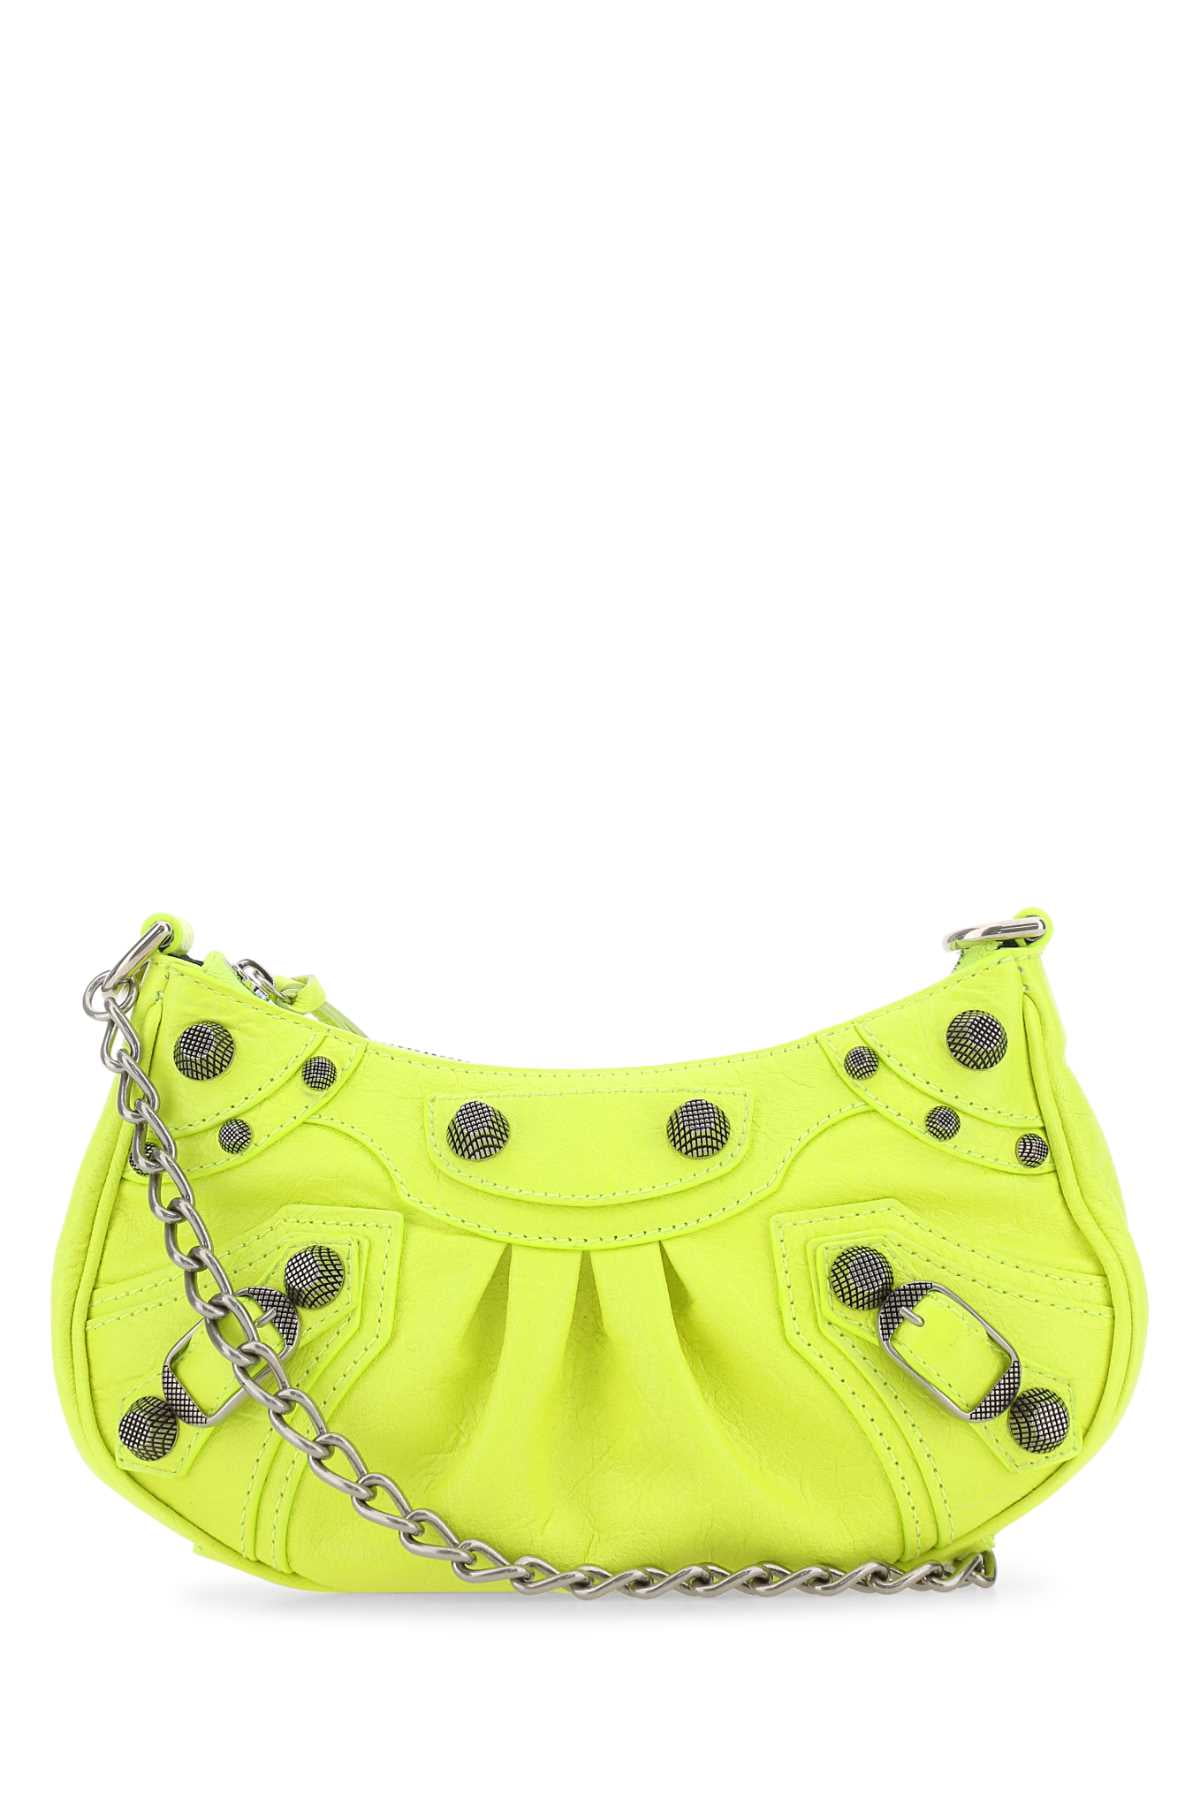 Balenciaga Neon Yellow Croc Embossed Calf Leather XX Shoulder Bag  Balenciaga | TLC